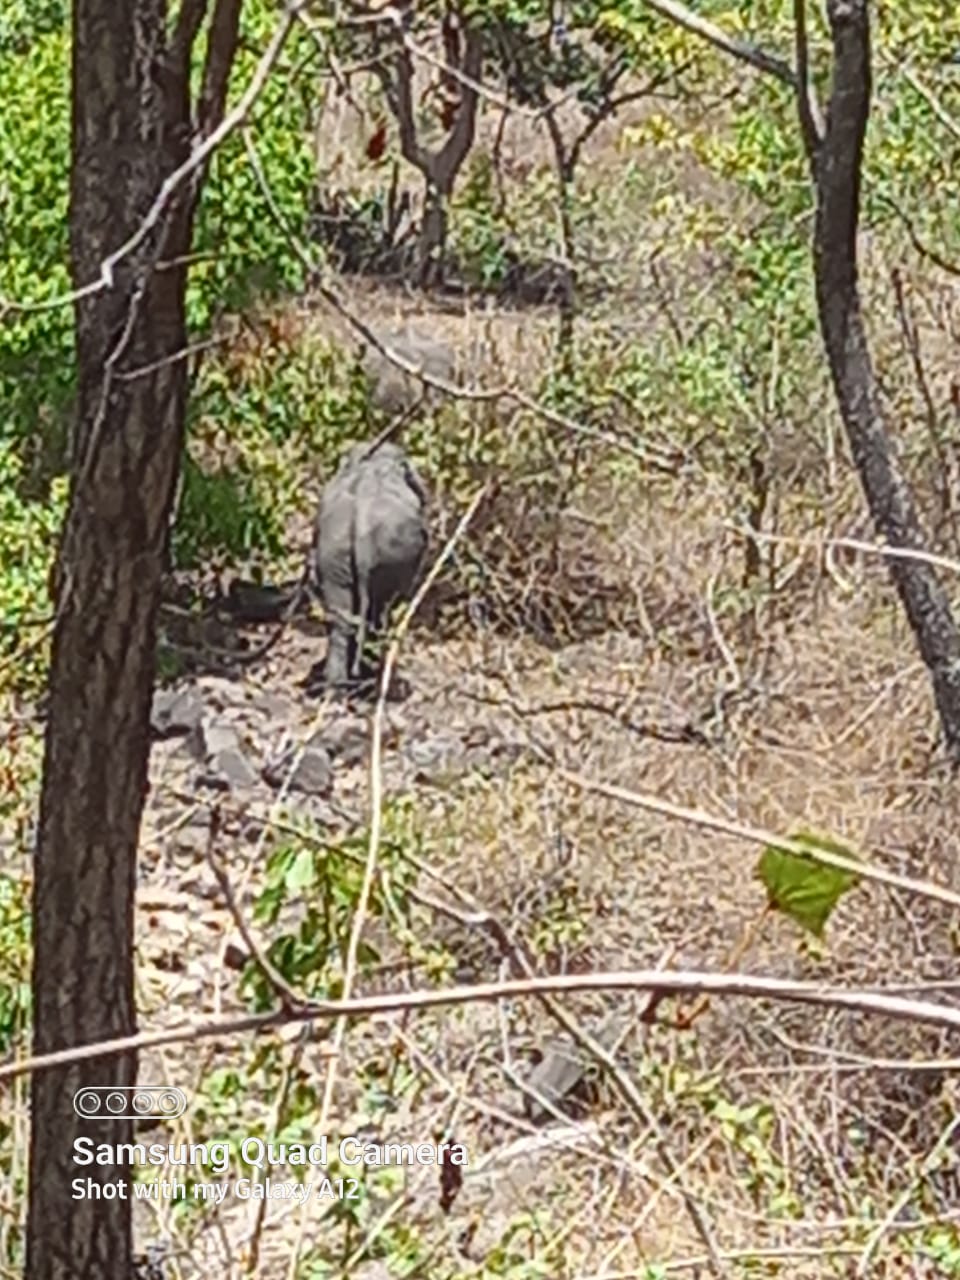 Here elephants took a U-turn by stepping towards Jaithari, now camped